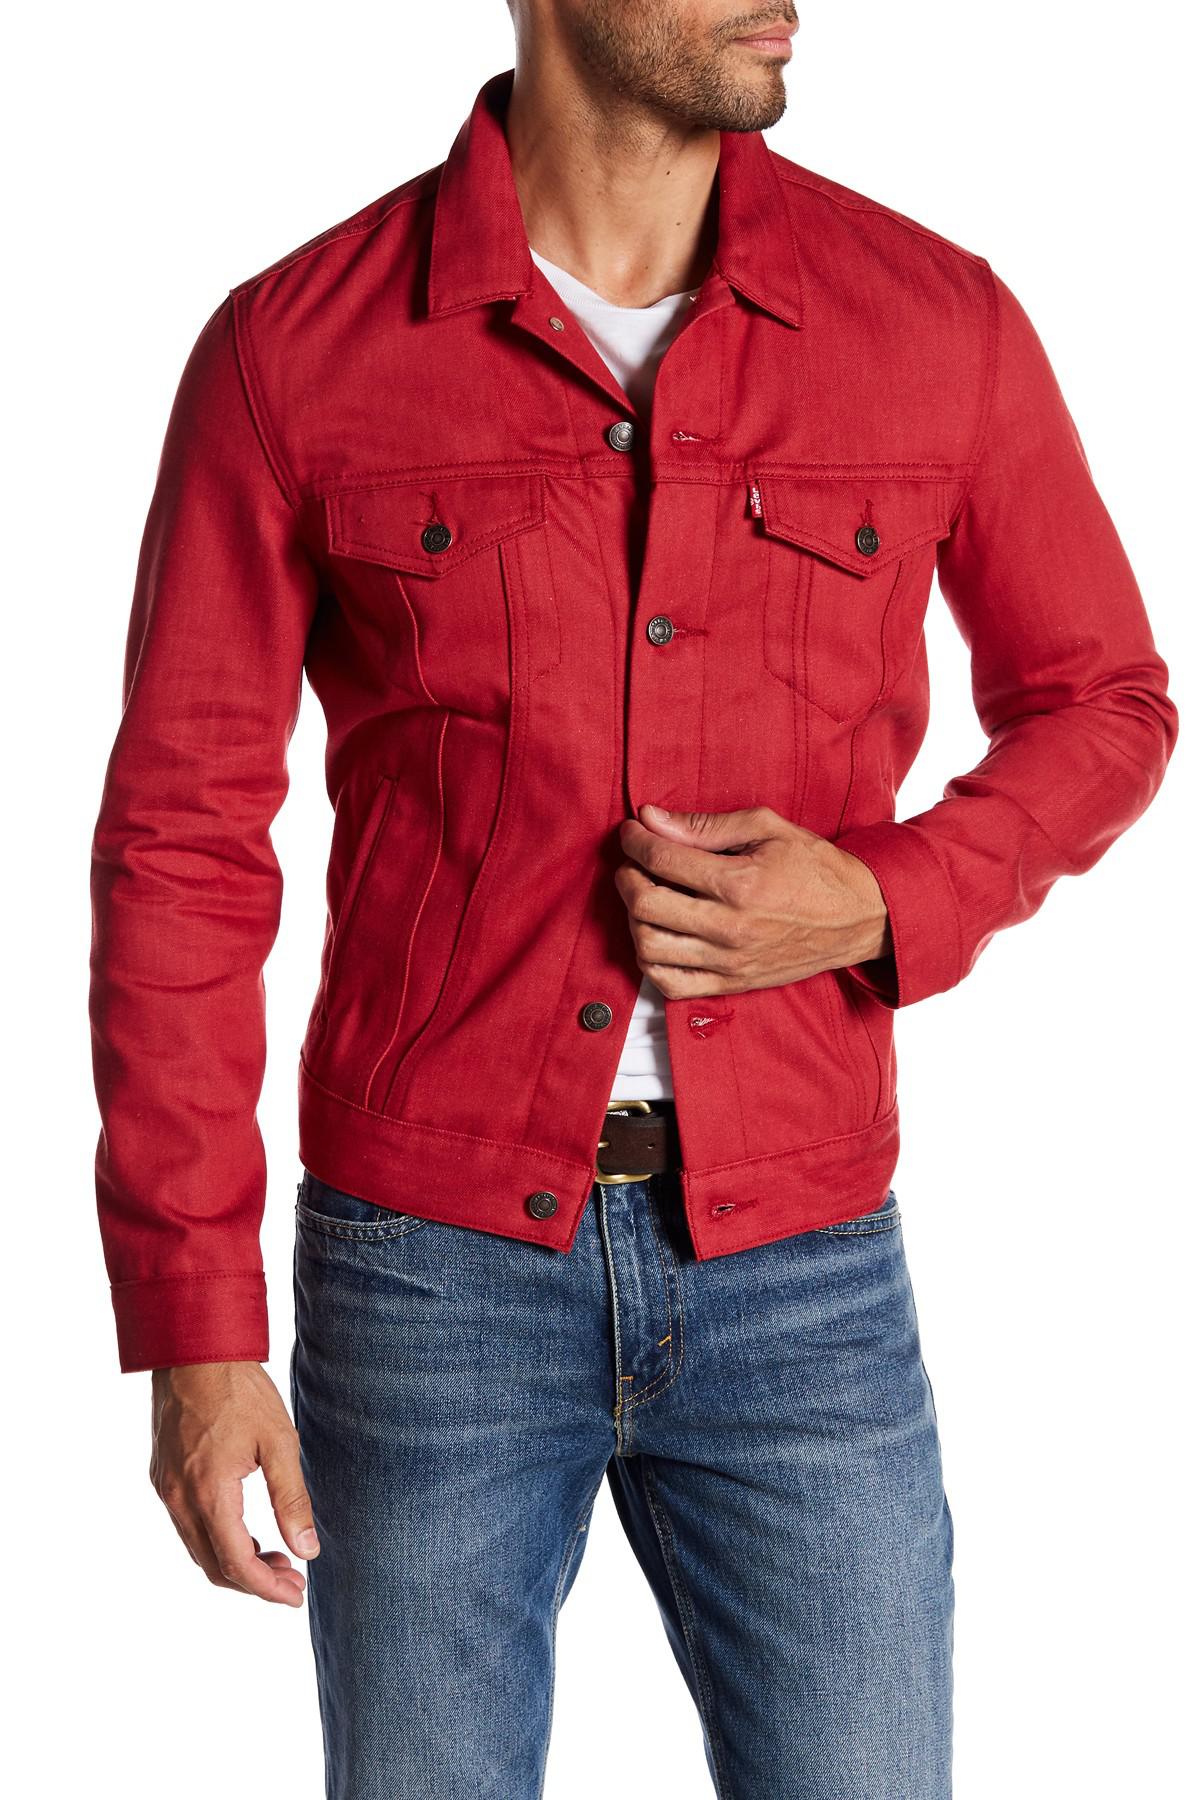 Lyst - Levi's The Trucker Denim Jacket in Red for Men